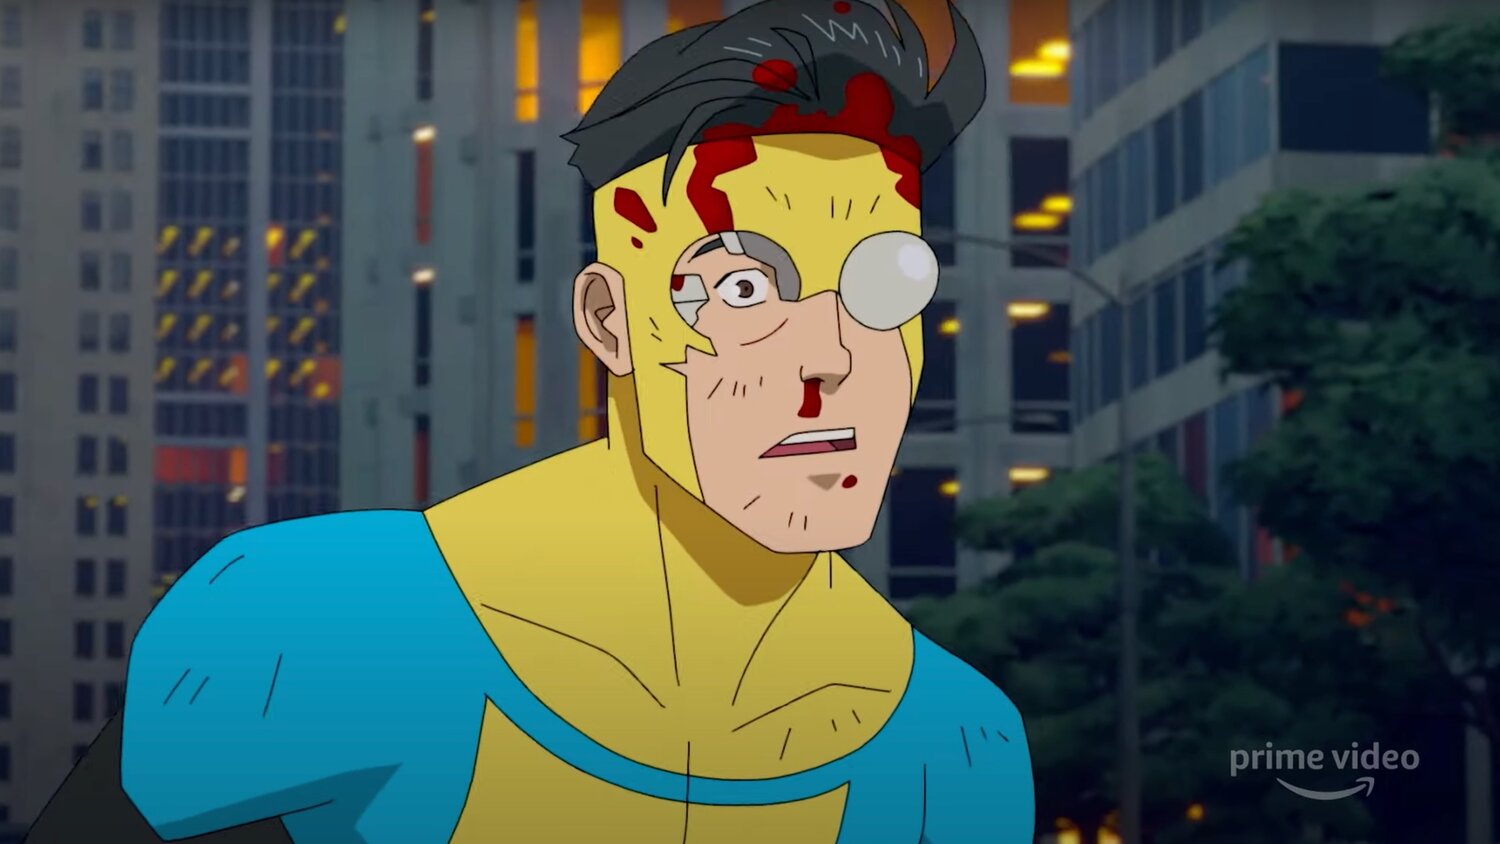 Bloody Full Trailer for Robert Kirkman's Animated Superhero Series INVINCIBLE — GeekTyrant